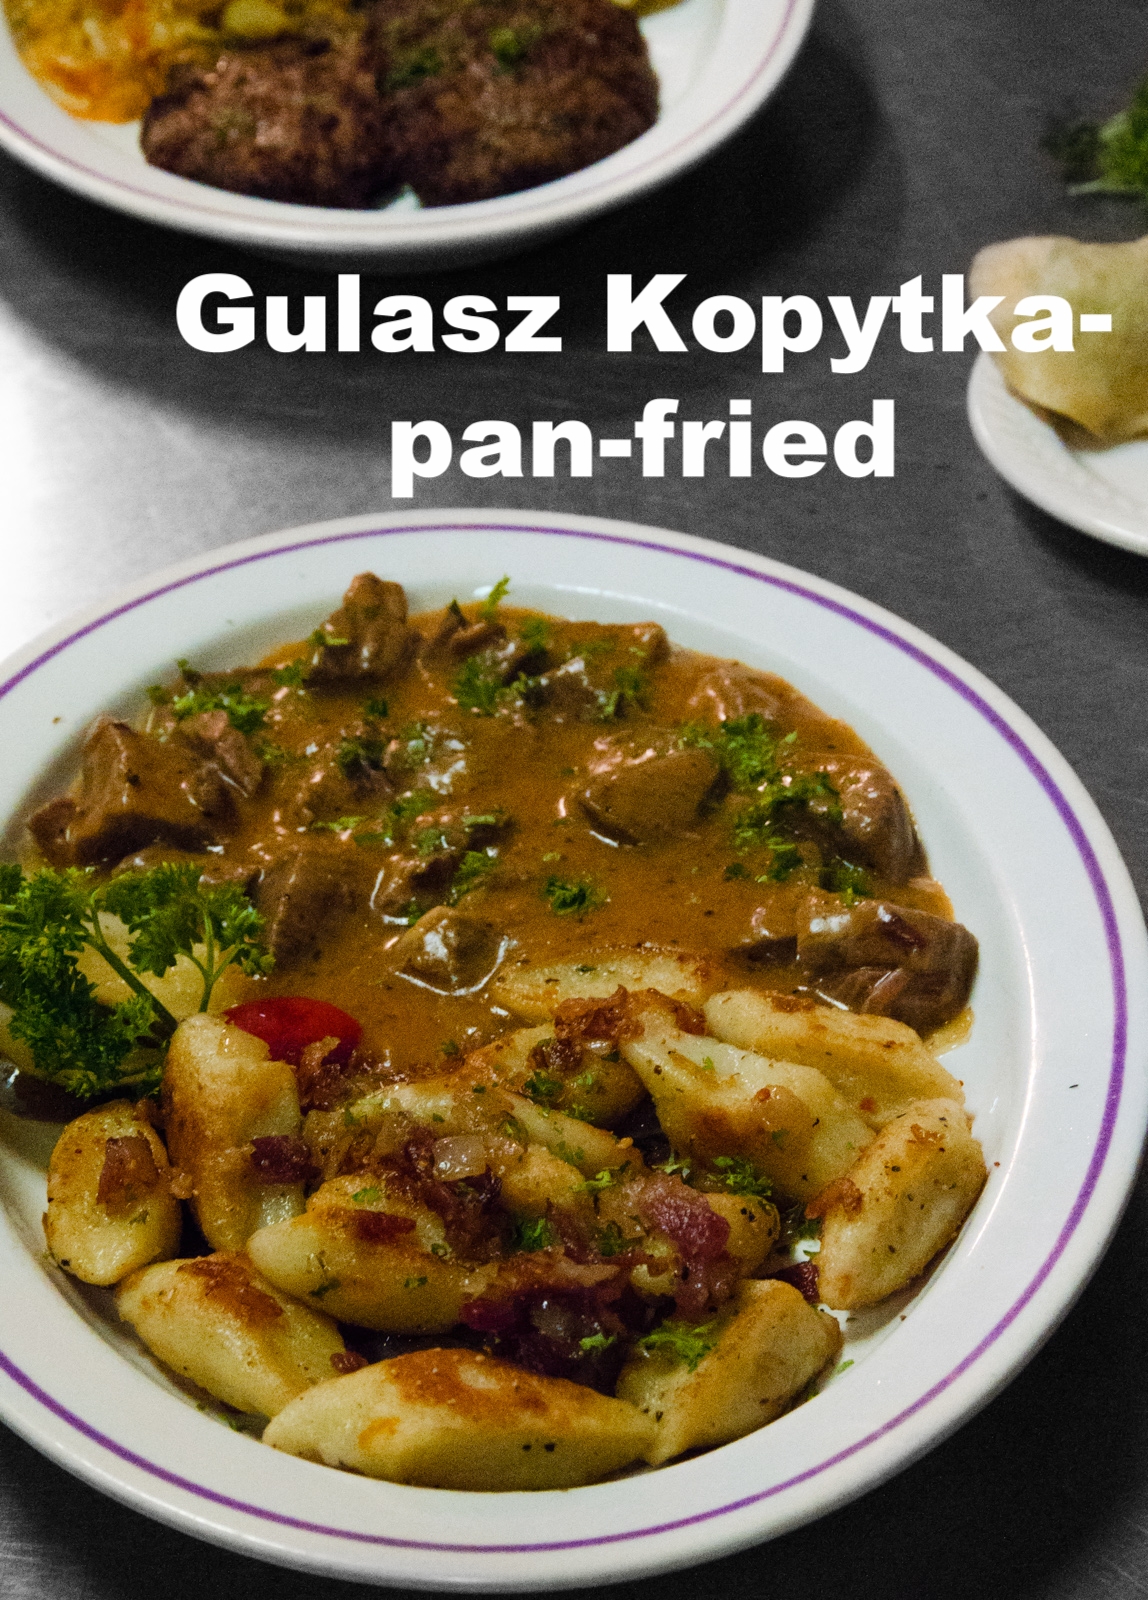 Food - Kopytka and Gulaz.jpg